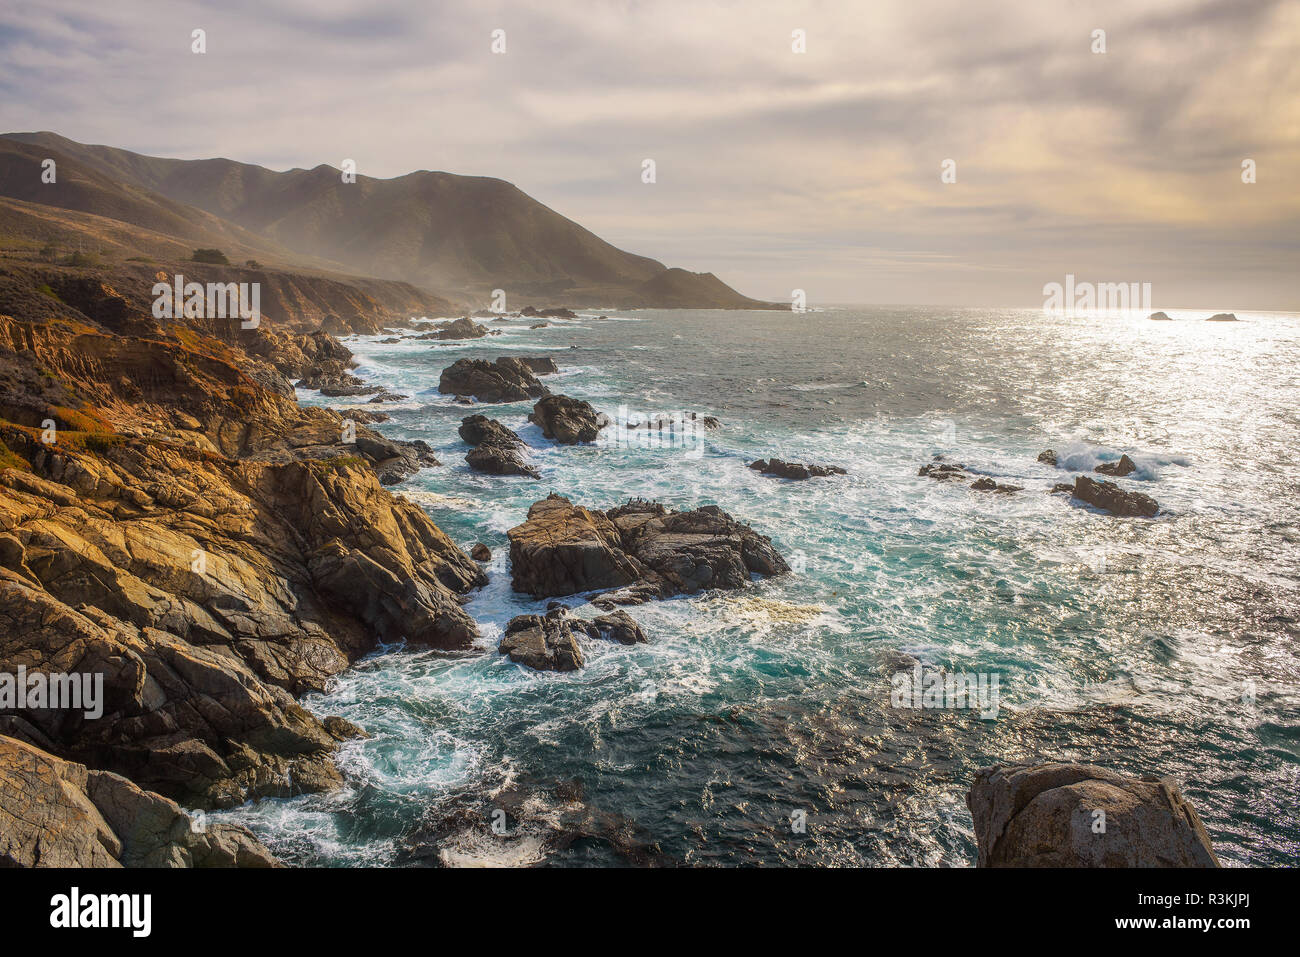 Pacific coastline scenery Stock Photo